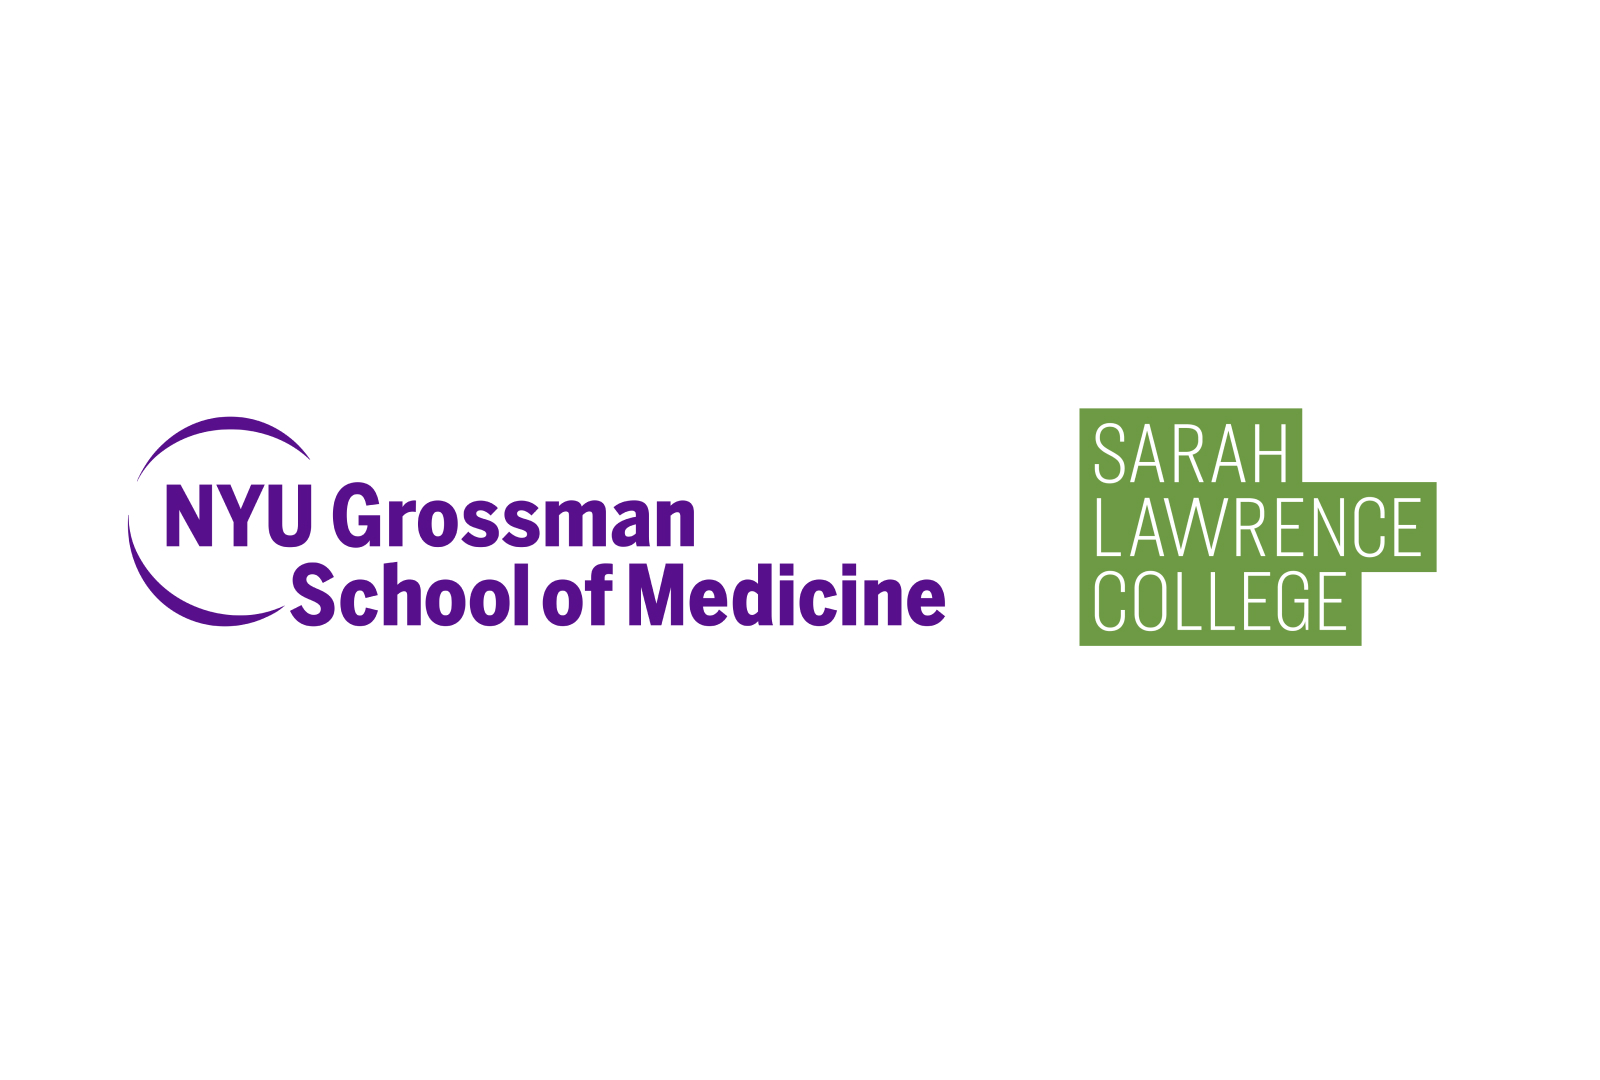 NYU Grossman School of Medicine and Sarah Lawrence College logos